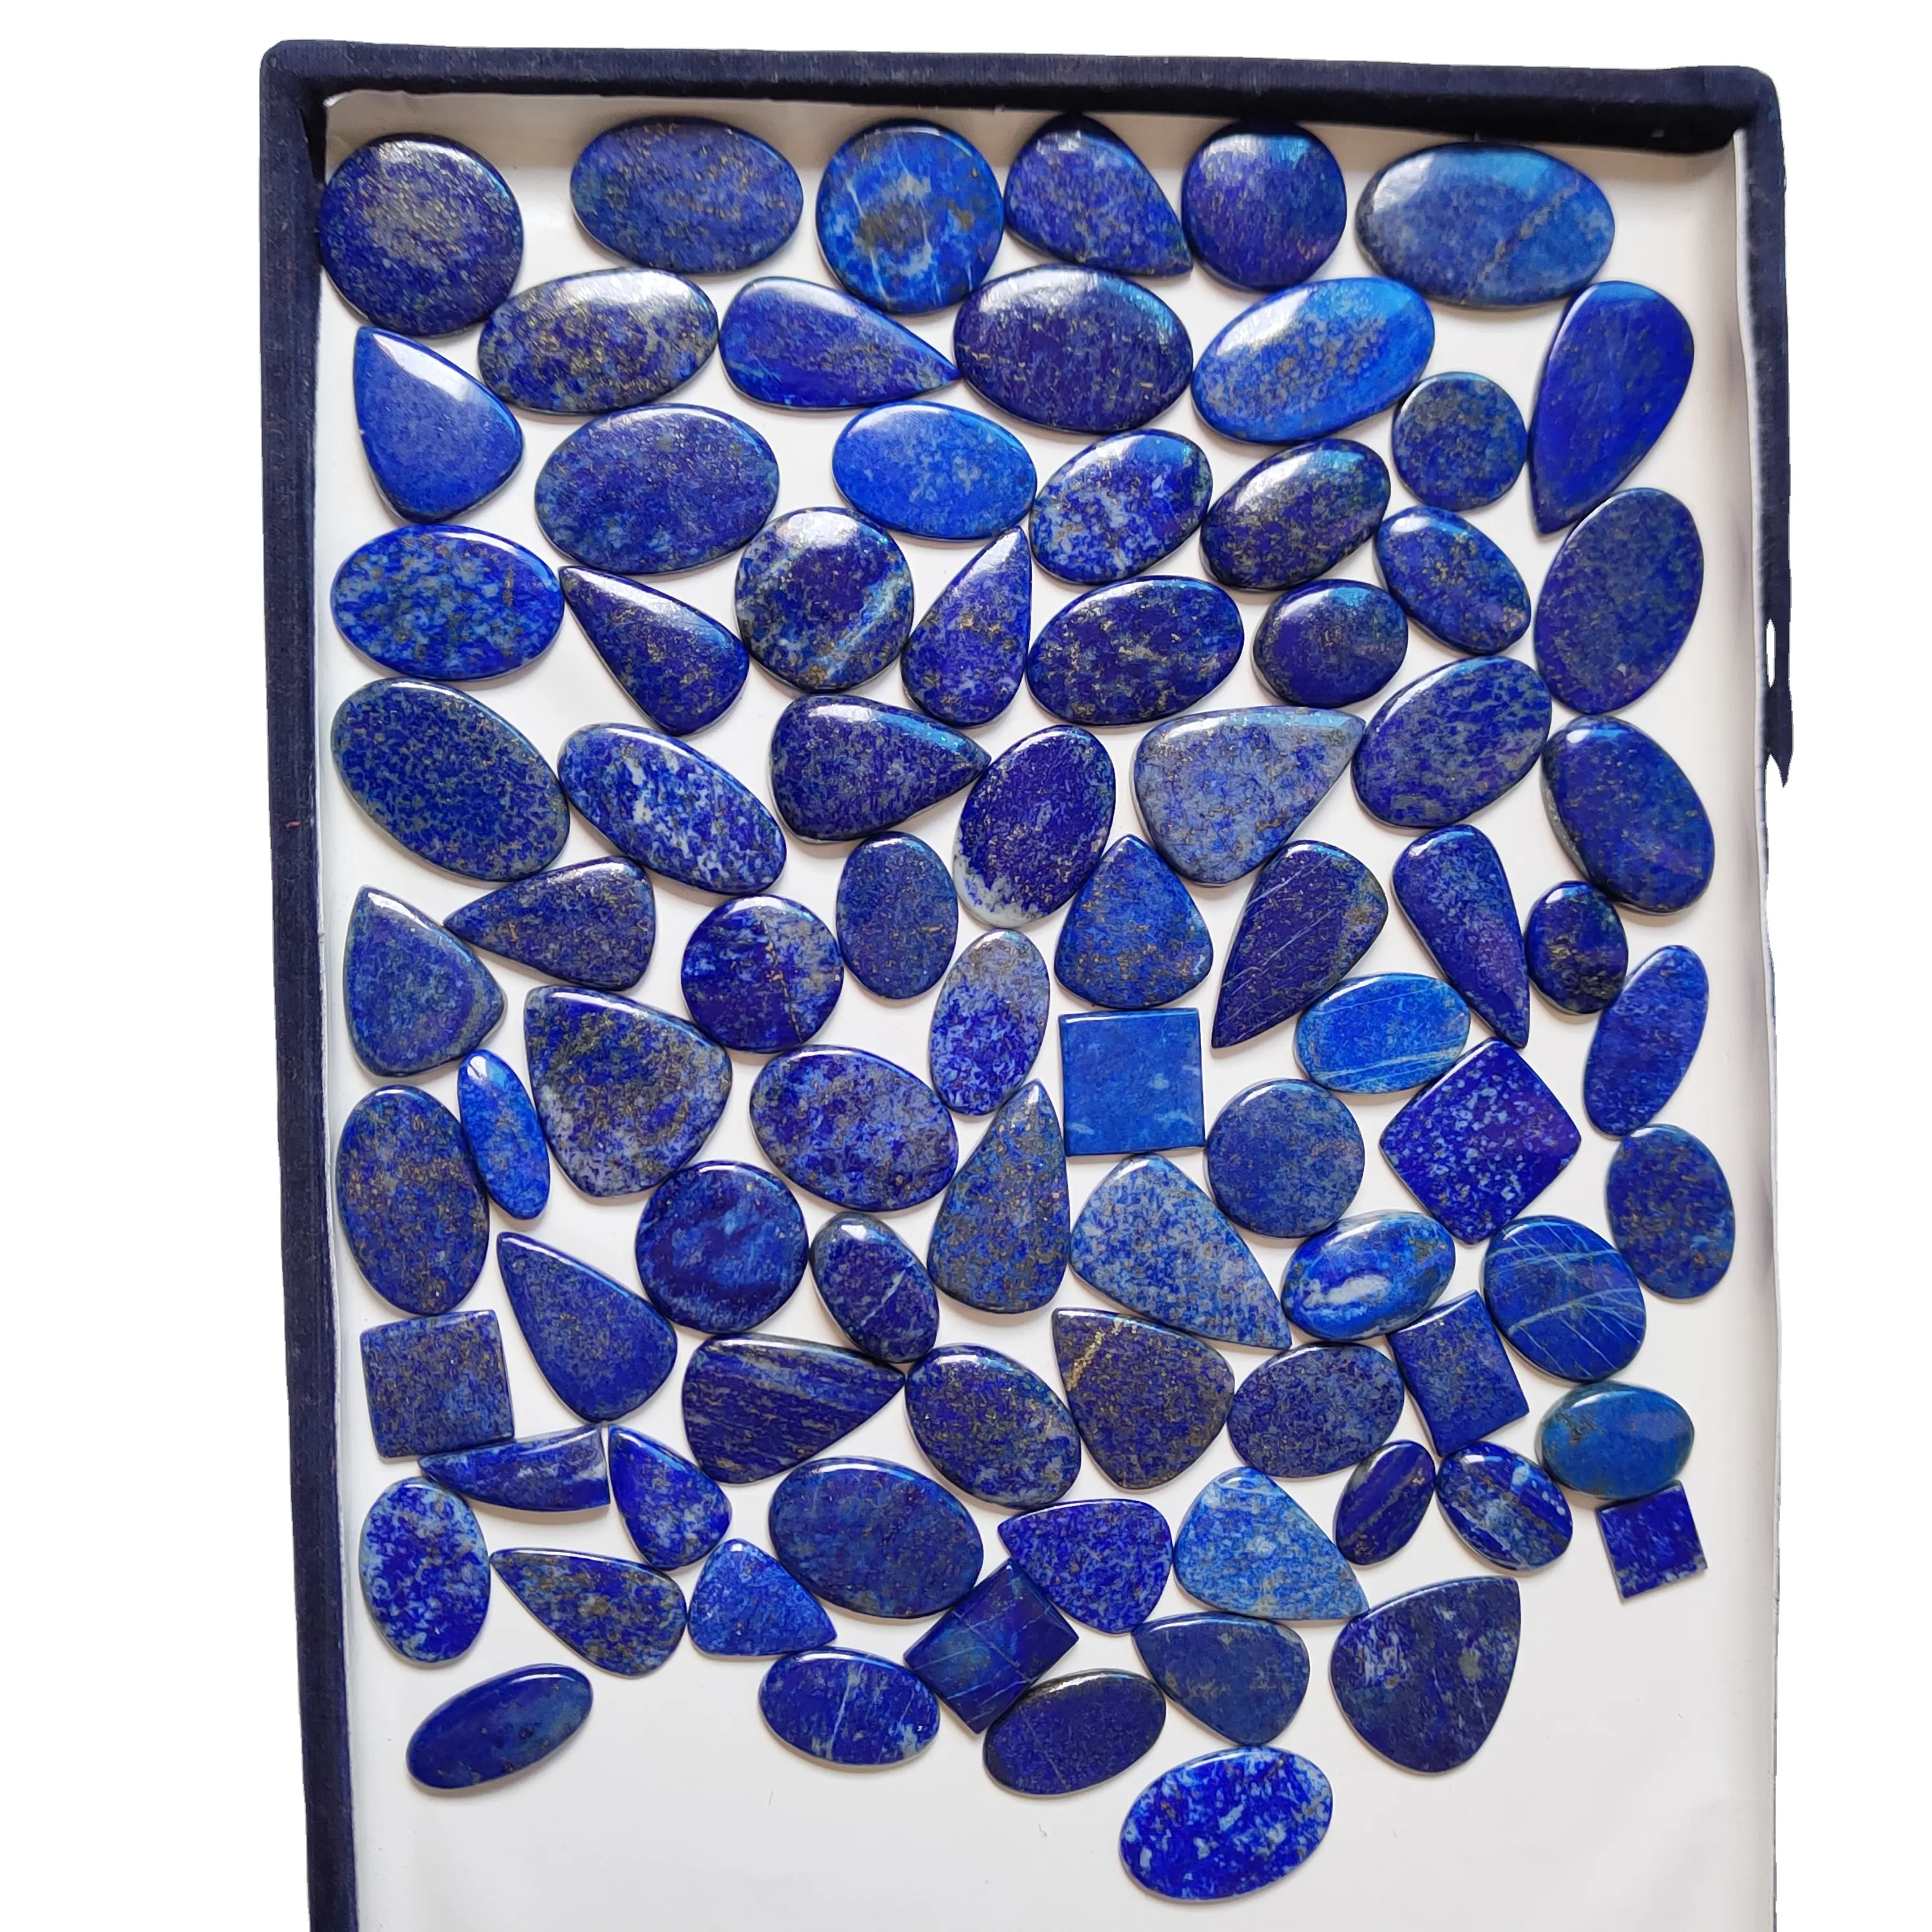 Batu pembuat perhiasan Lapis Lazuli Cabochon kualitas terbaik Lapis Lazuli batu permata longgar Kristal penyembuhan Harga terjangkau Lot batu